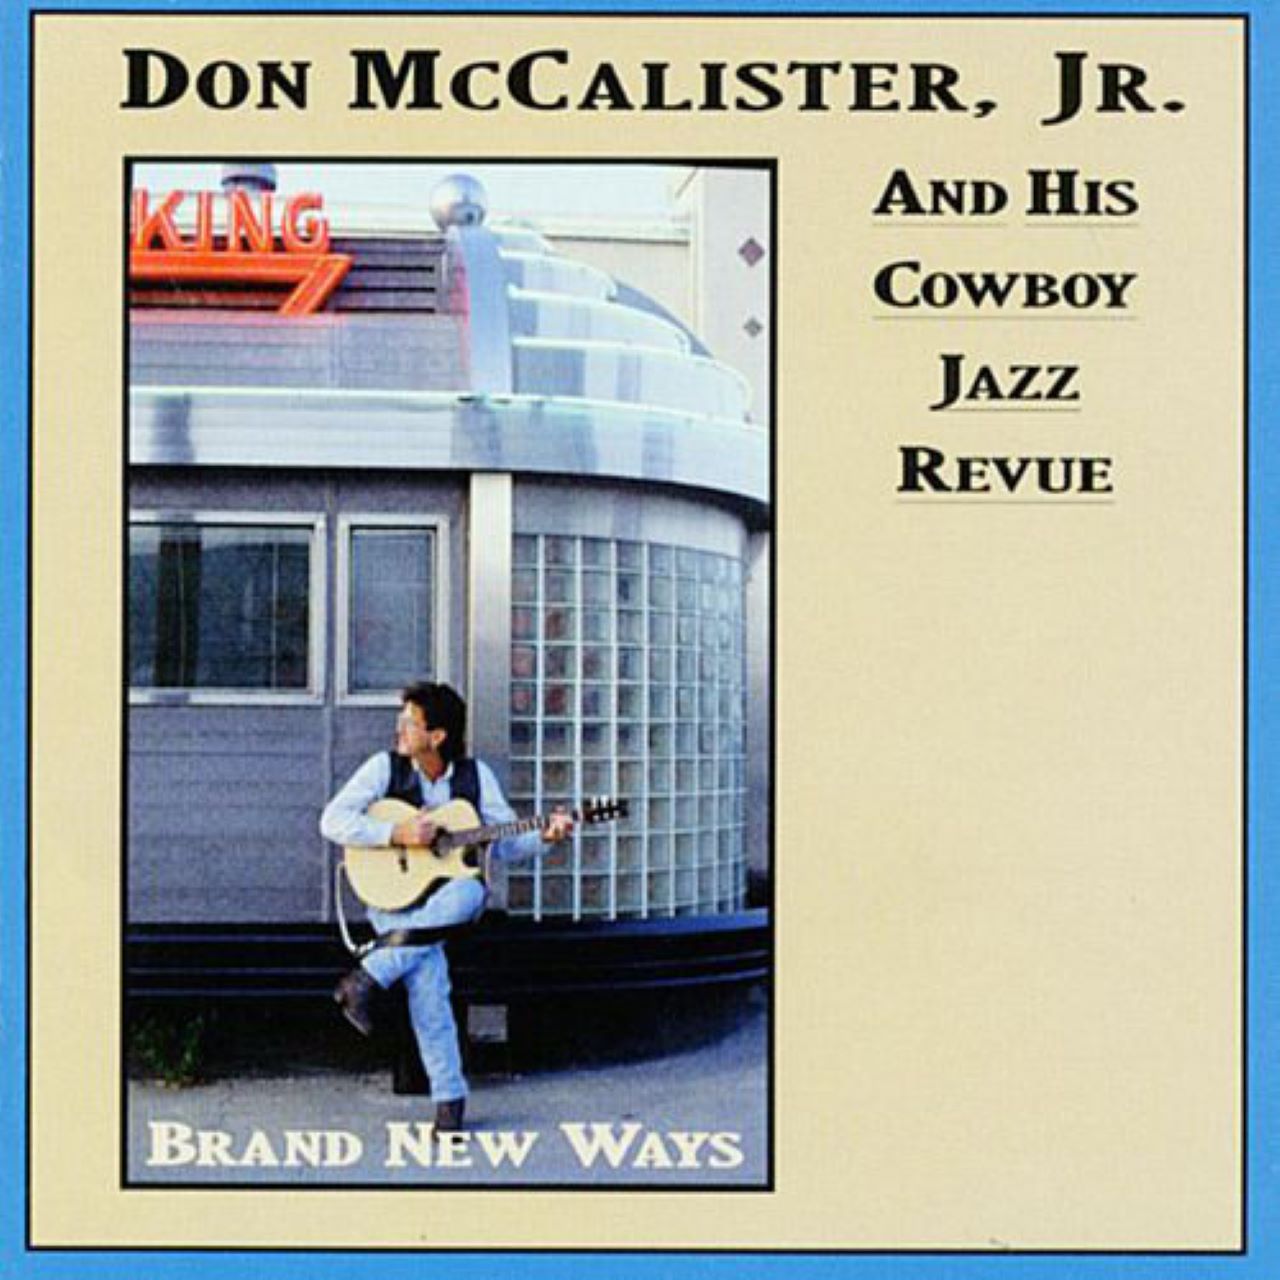 Don McCalister Jr. & His Cowboy Jazz Revue - Brand New Ways cover album